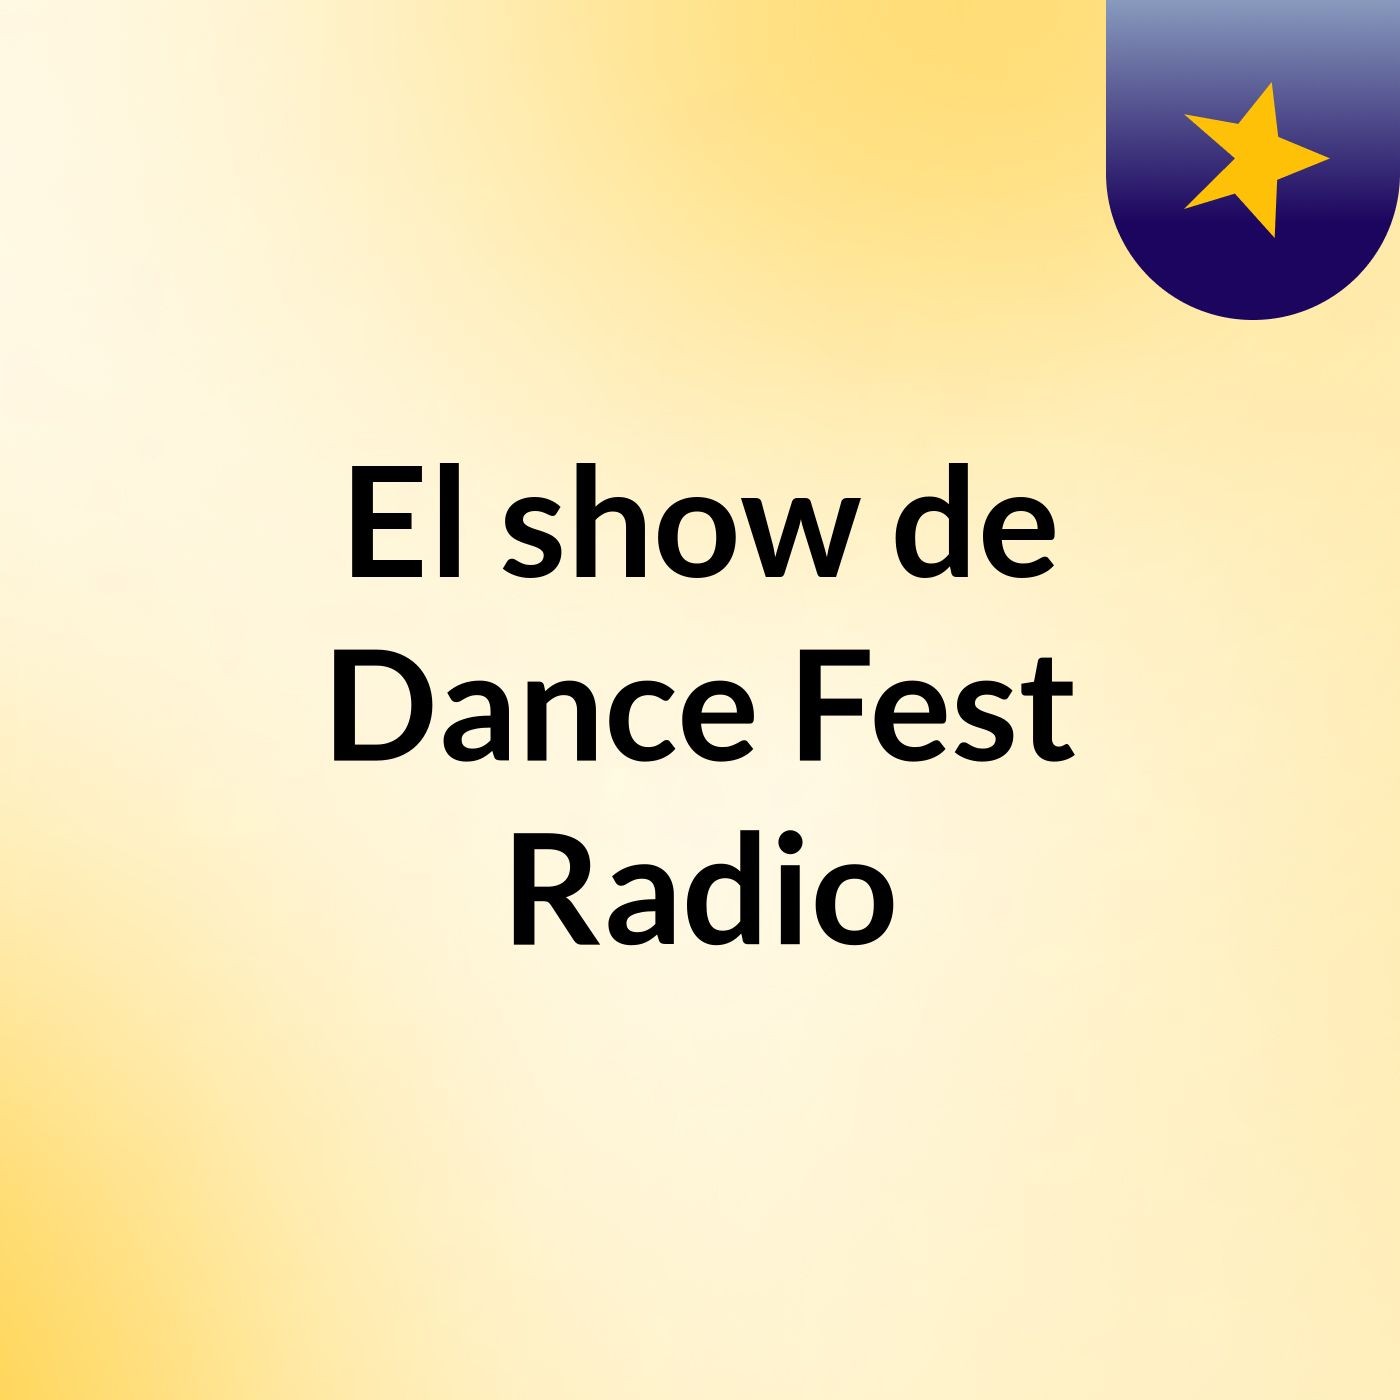 El show de Dance Fest Radio